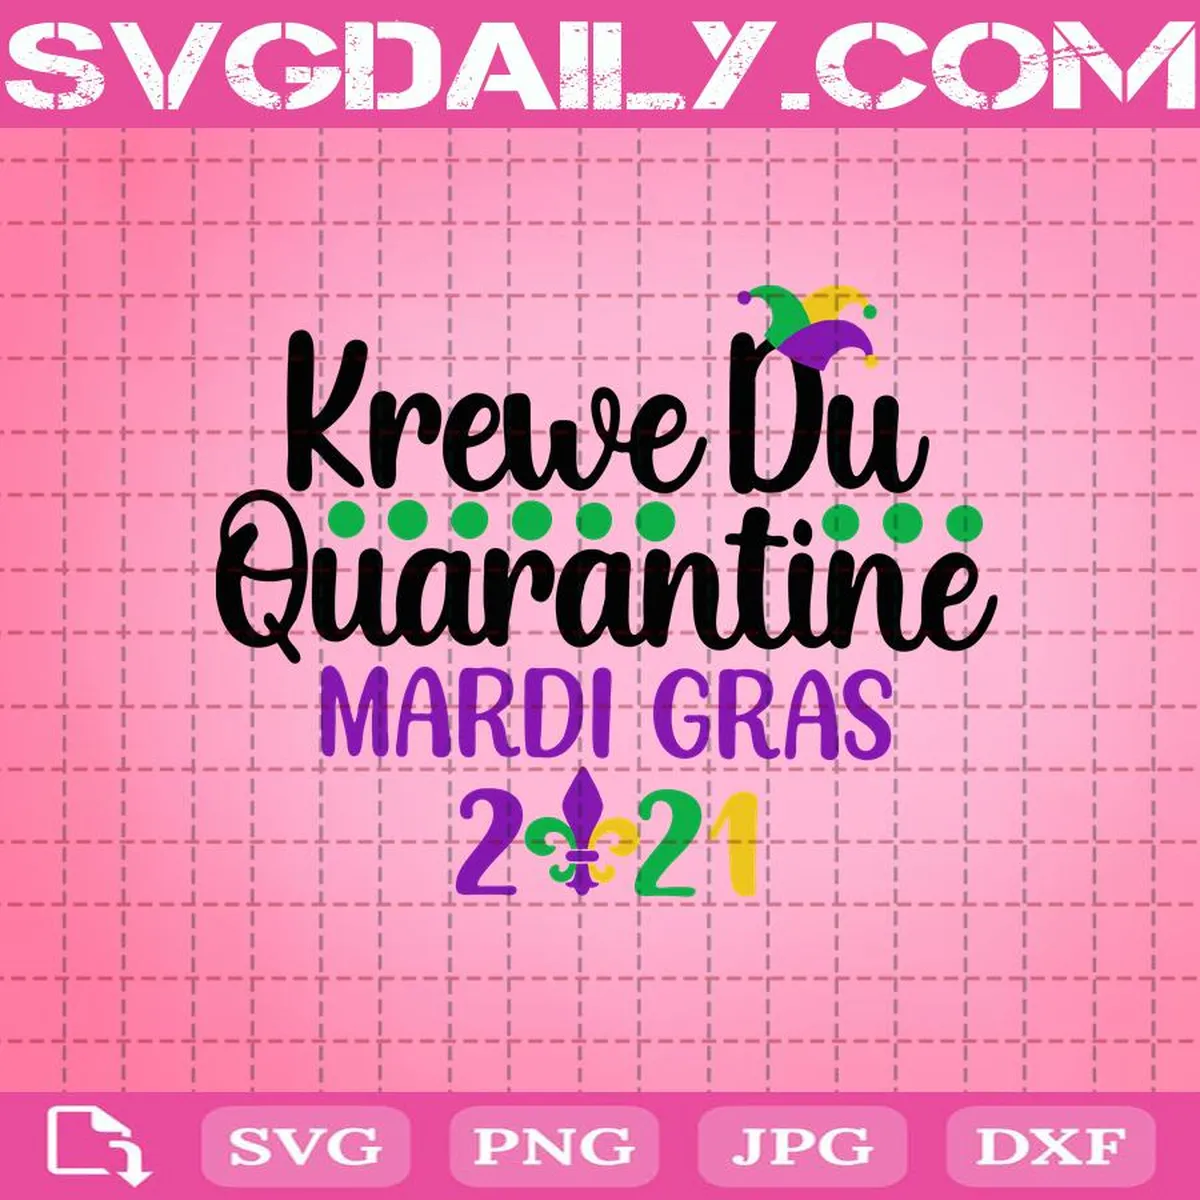 Krewe Du Quarantine Svg, 2021 Mardi Gras Svg, Mardi Gras Svg, Quarantine Svg, Covid Svg, Svg Png Dxf Eps AI Instant Download